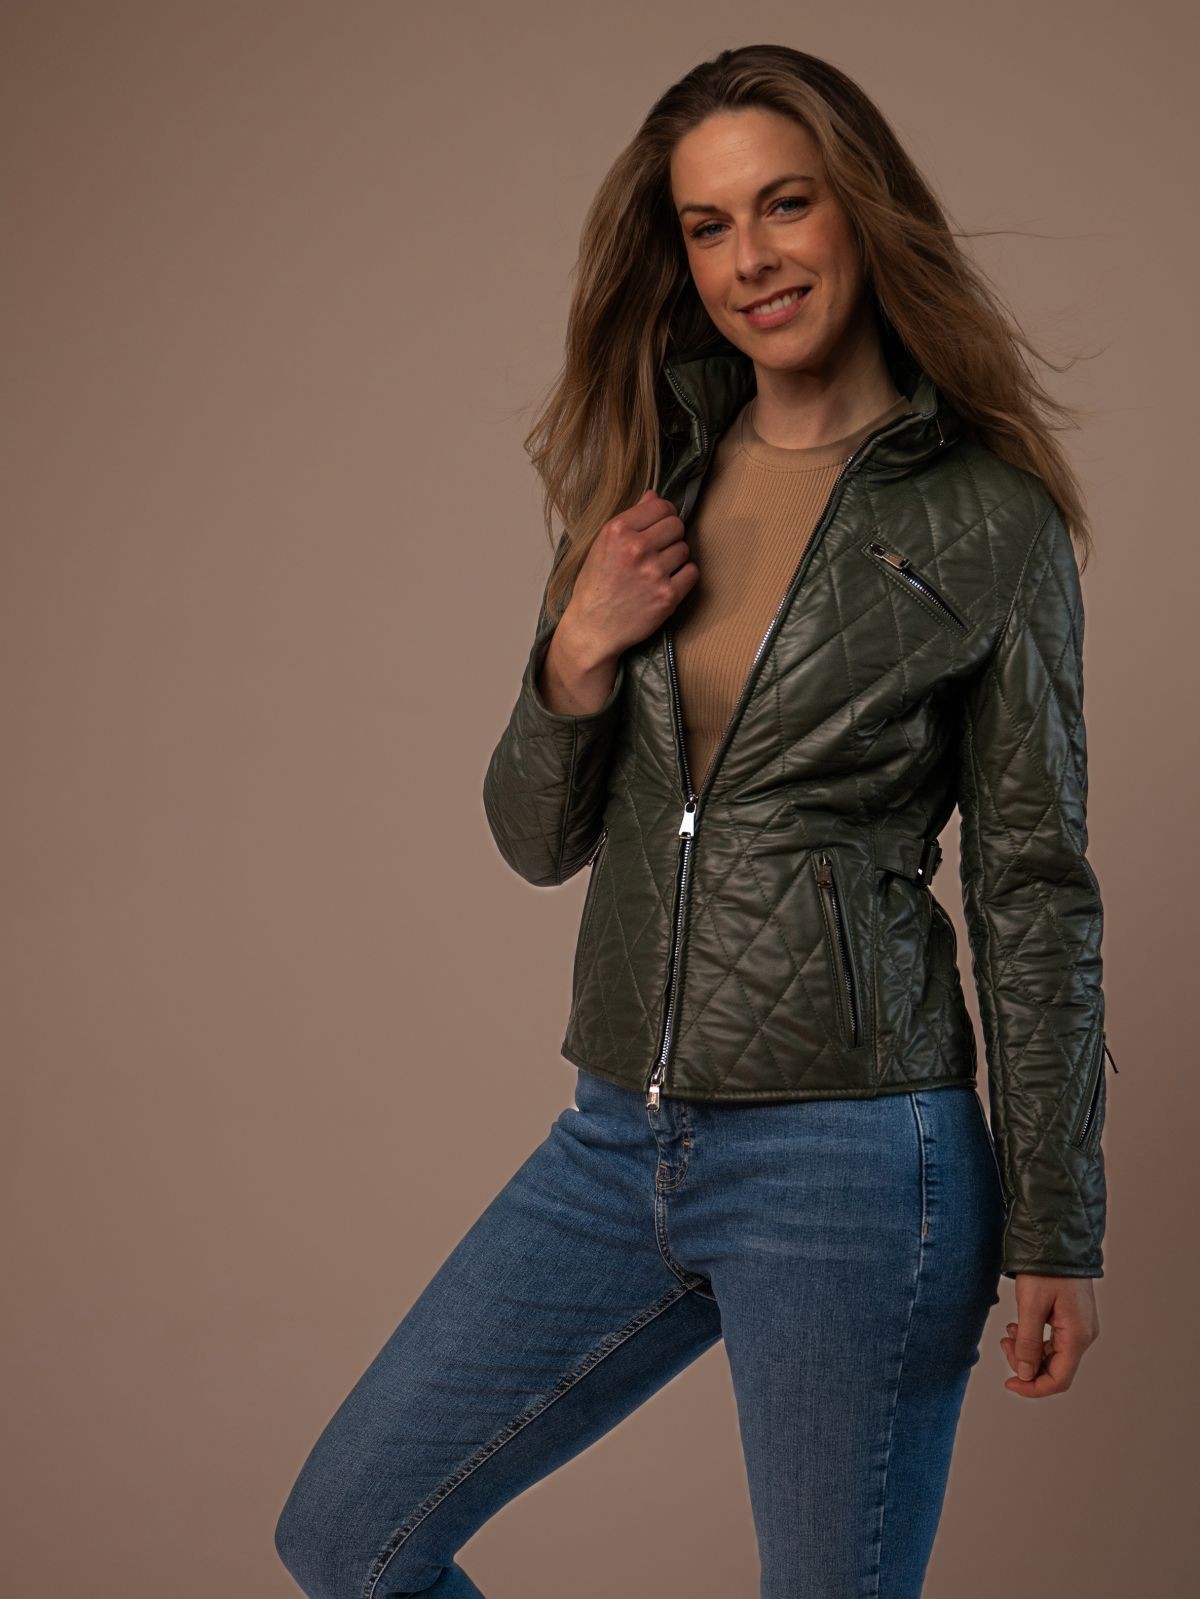 Virginia € Ladies Quilted Leather 2.499,00 Jacket,